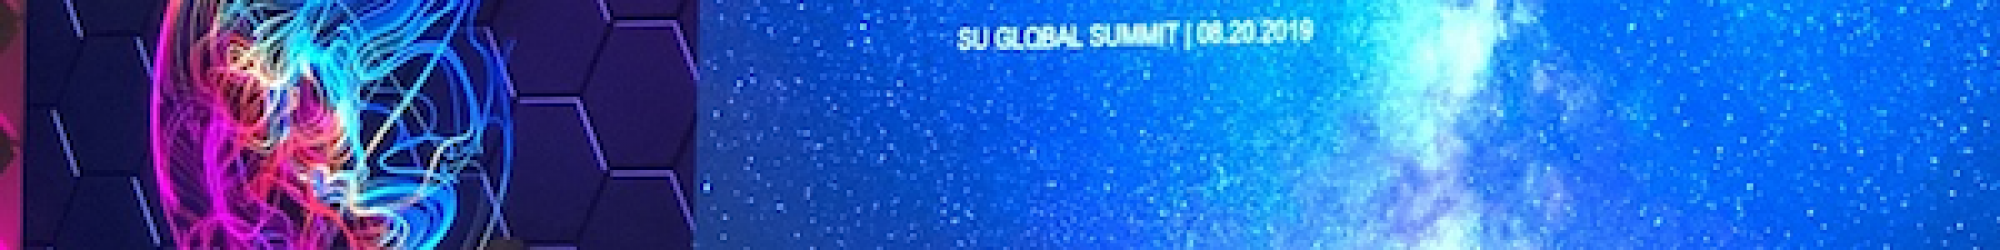 SUGlobal Summit